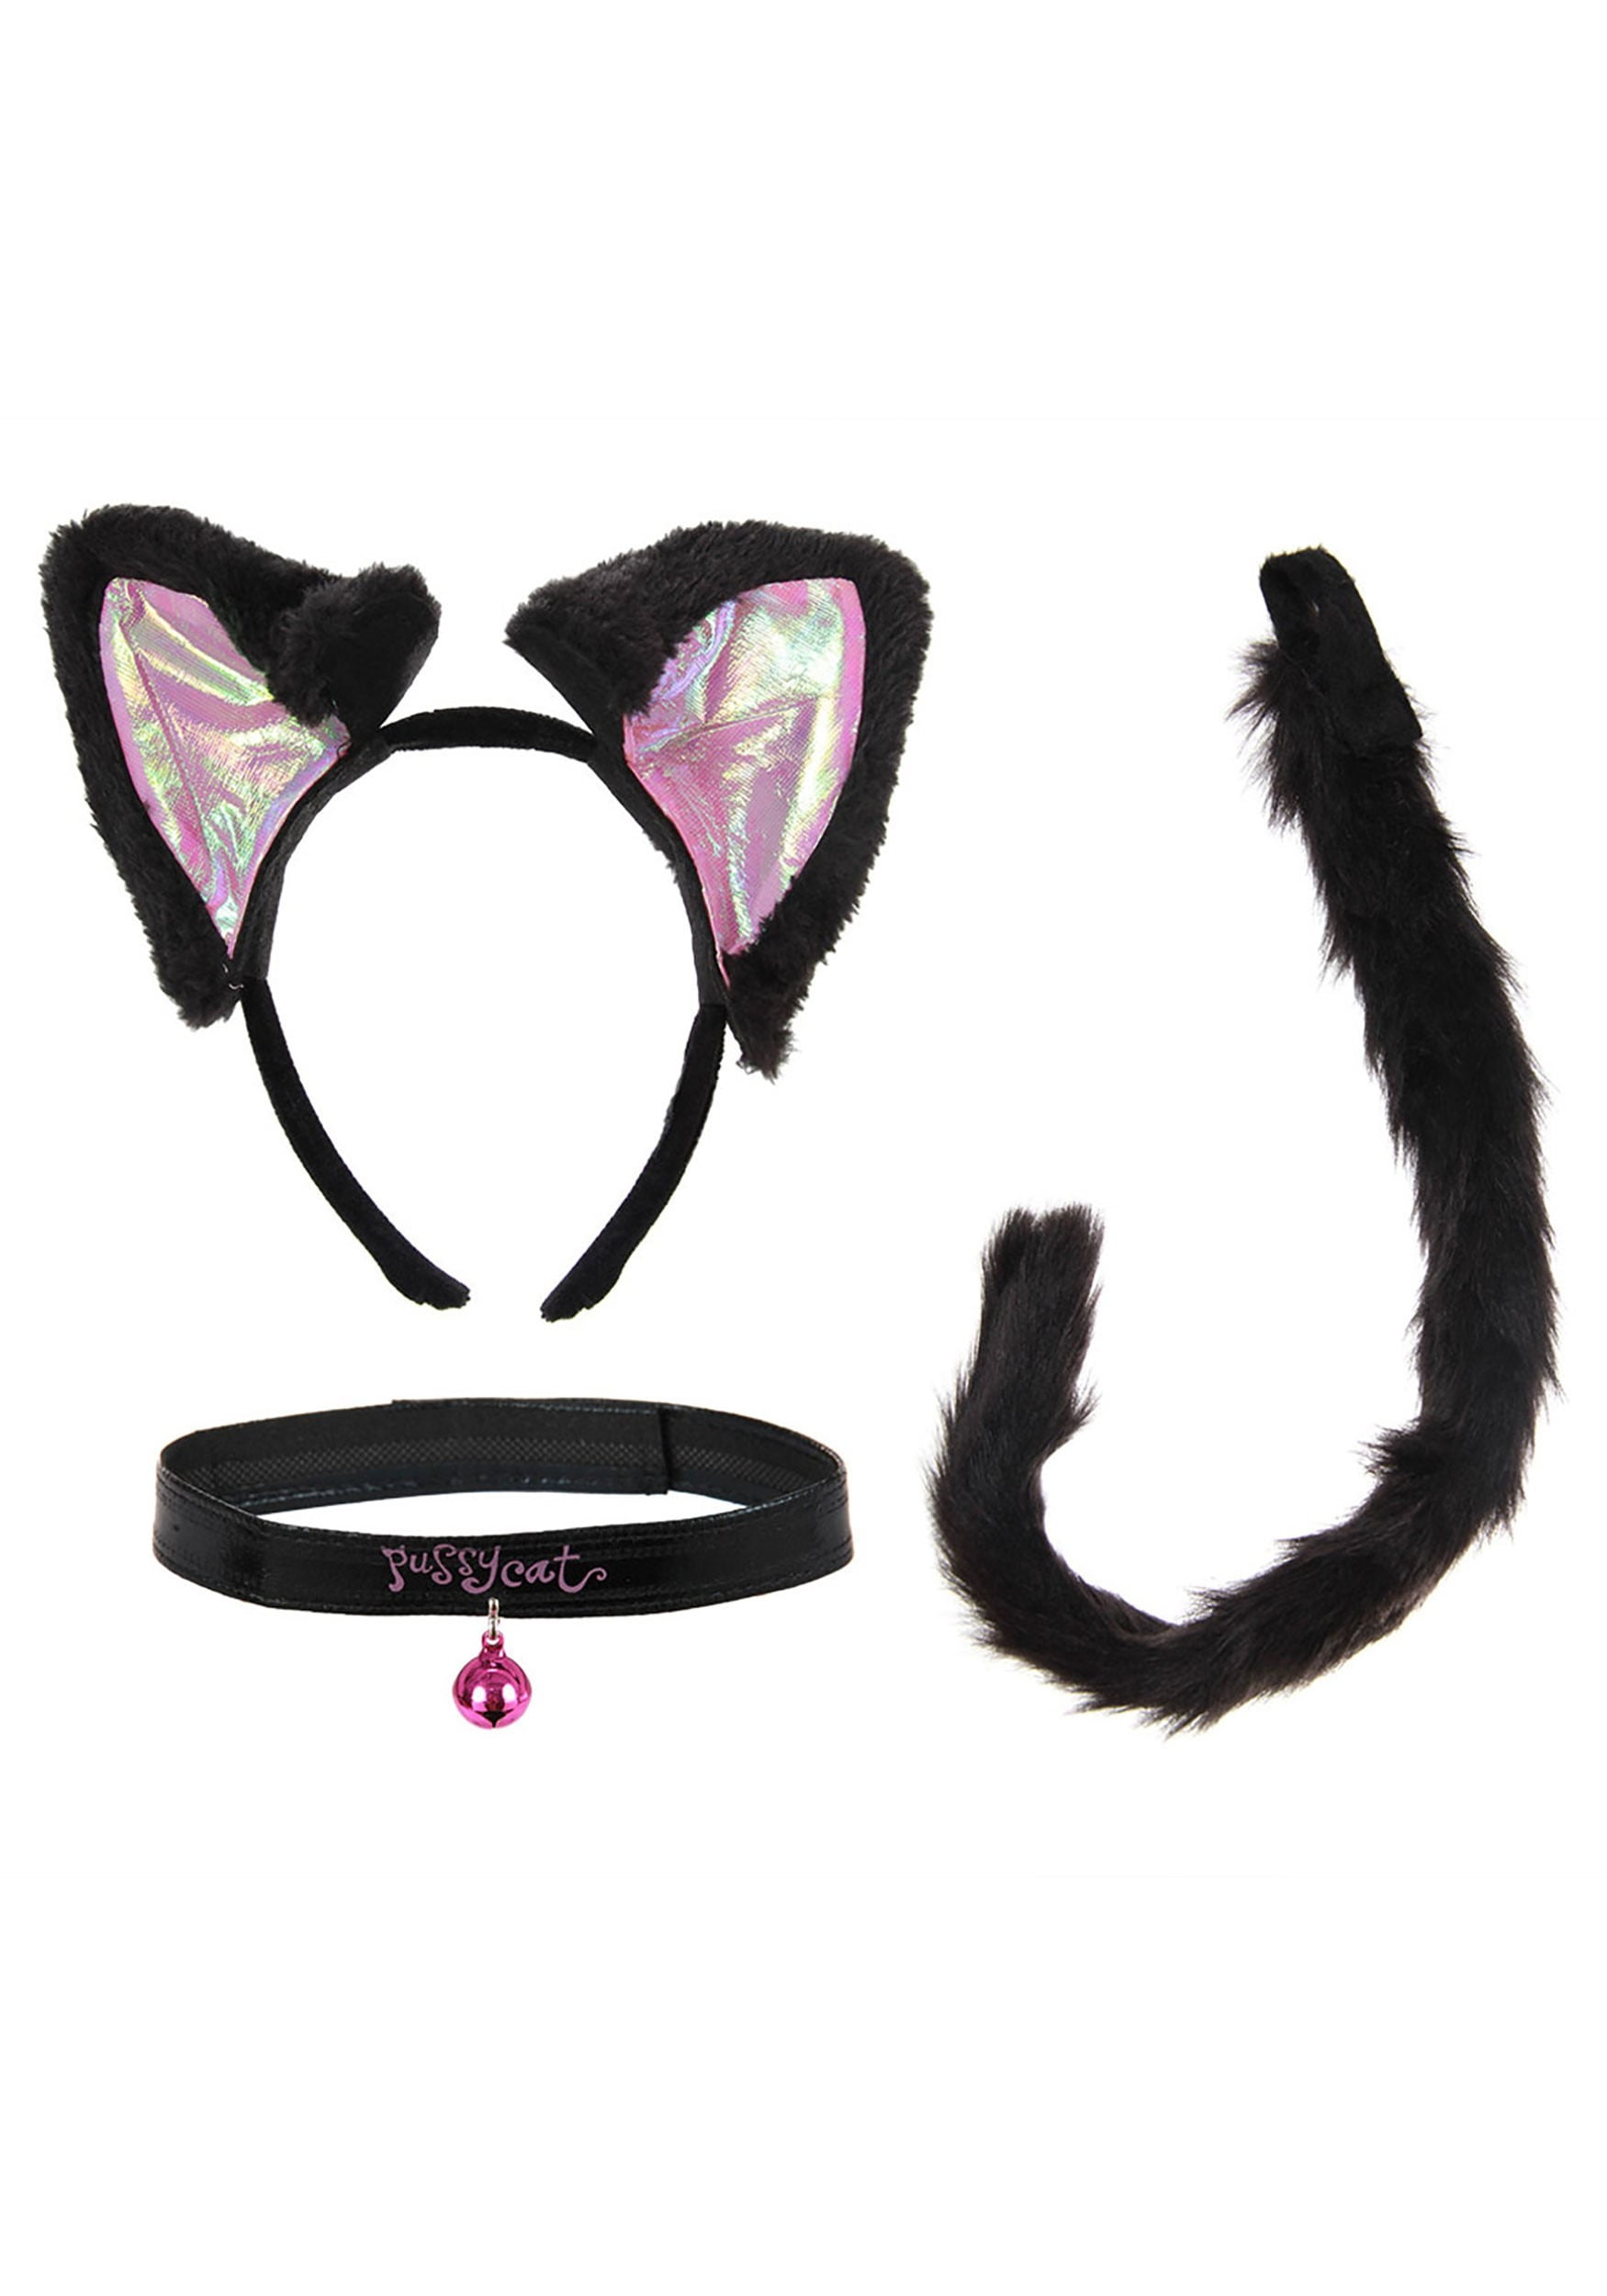 Child Cat Costume Kit Ears Headband Tail Collar Tie Girls Child Kids Black Kitty 